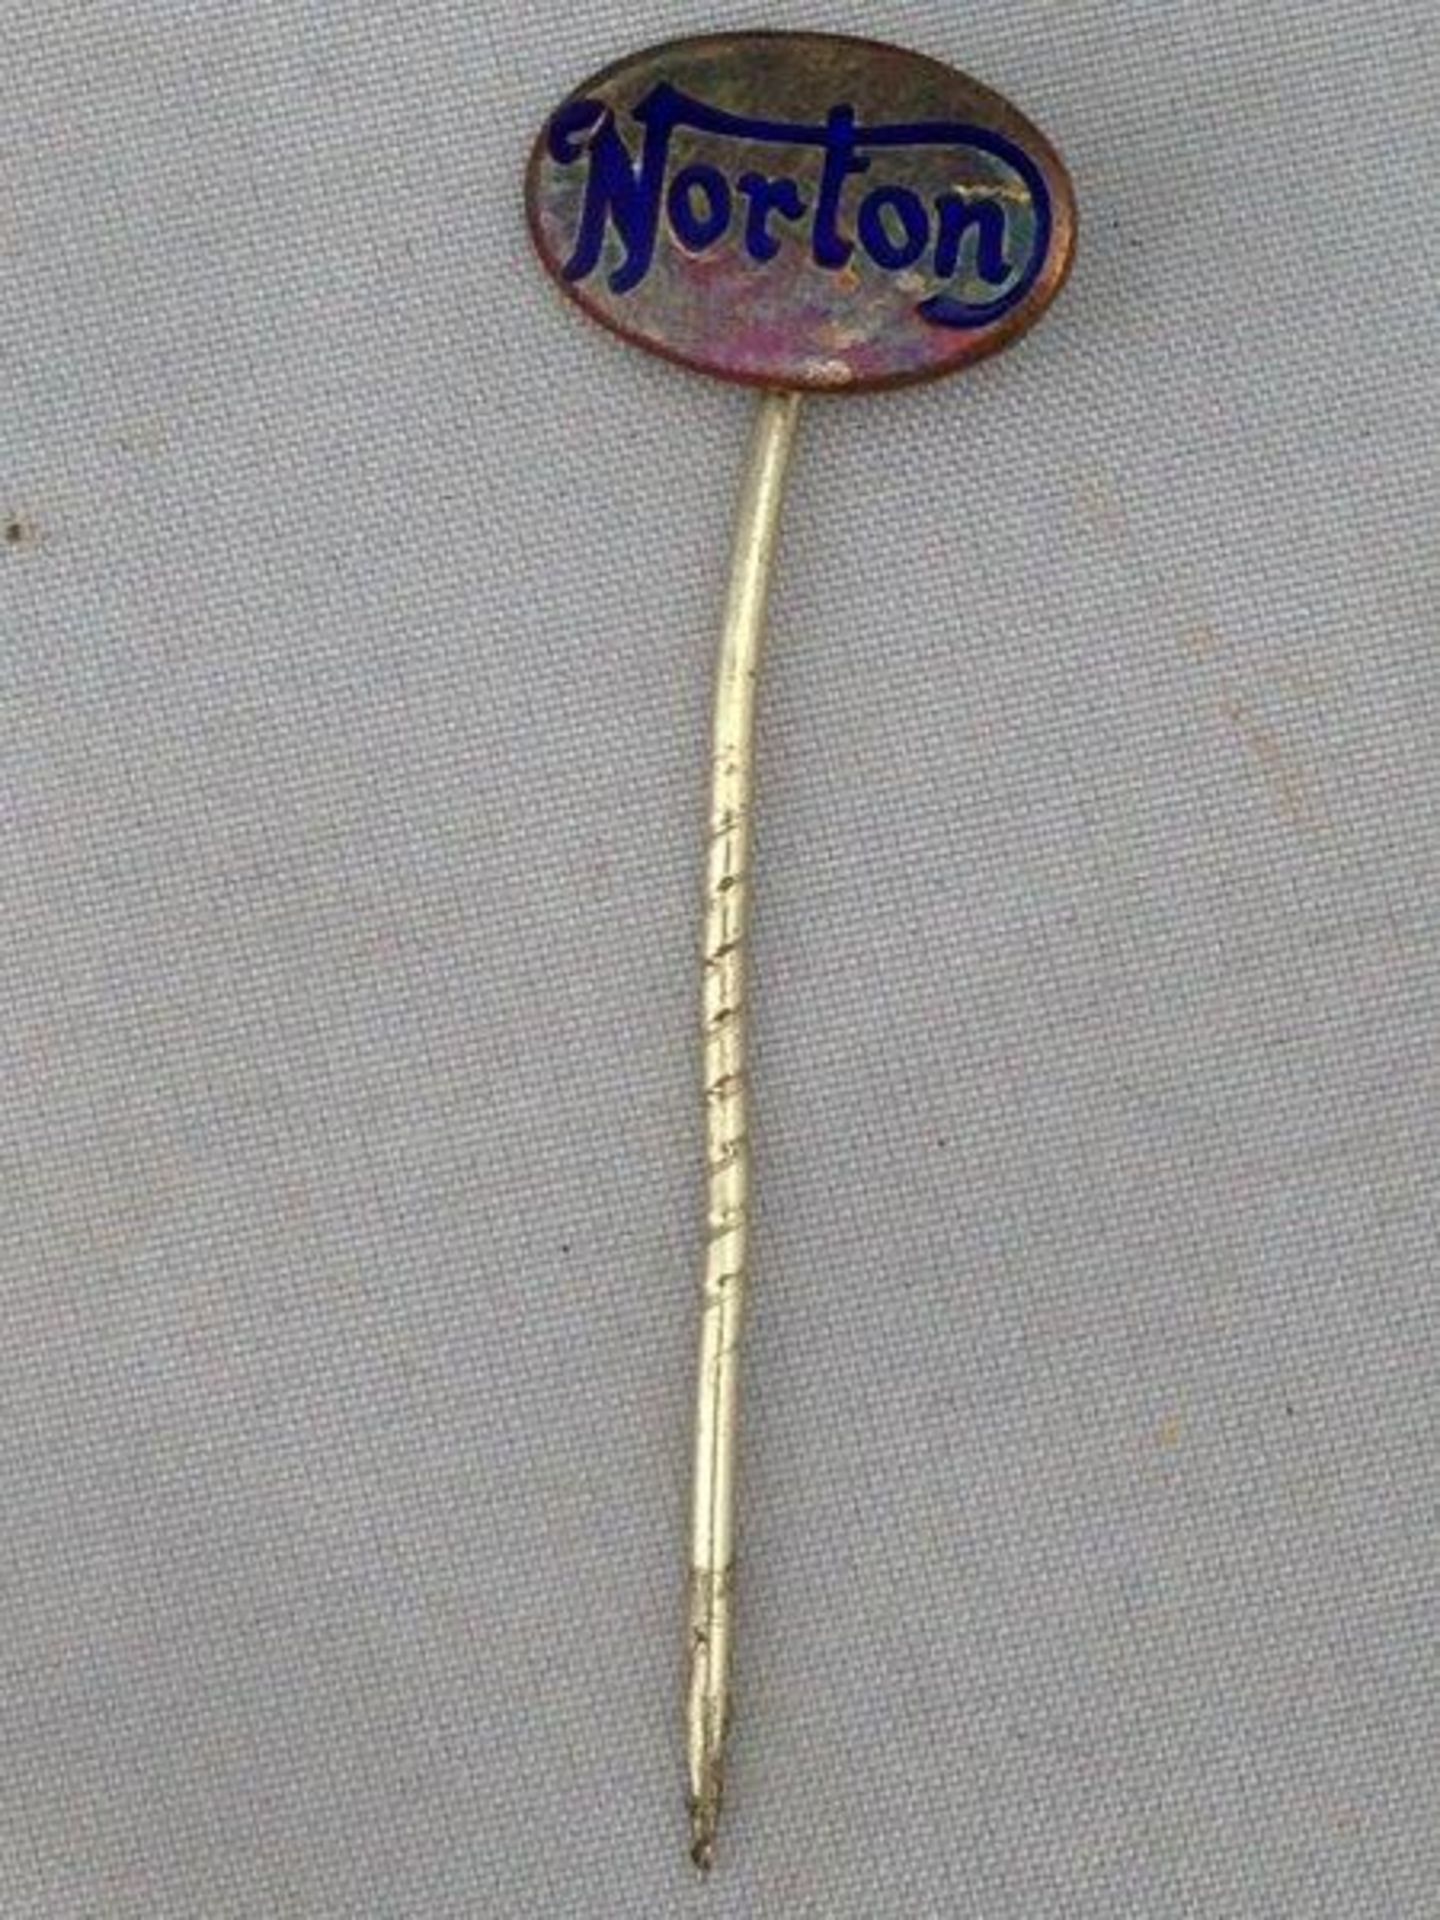 A Norton stick pin.